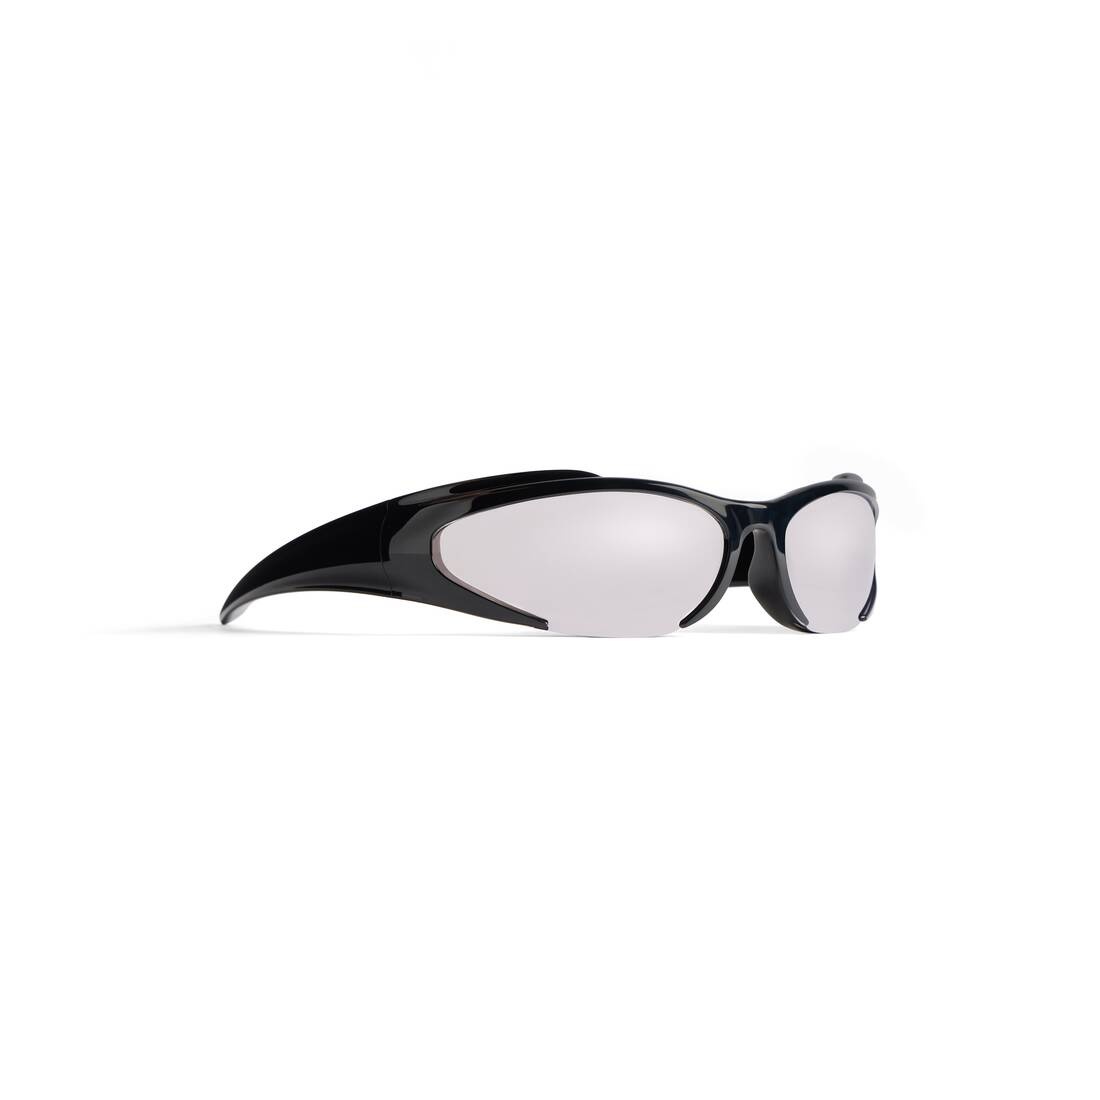 Skiwear - Reverse Xpander Rectangle Sunglasses in Black - 2